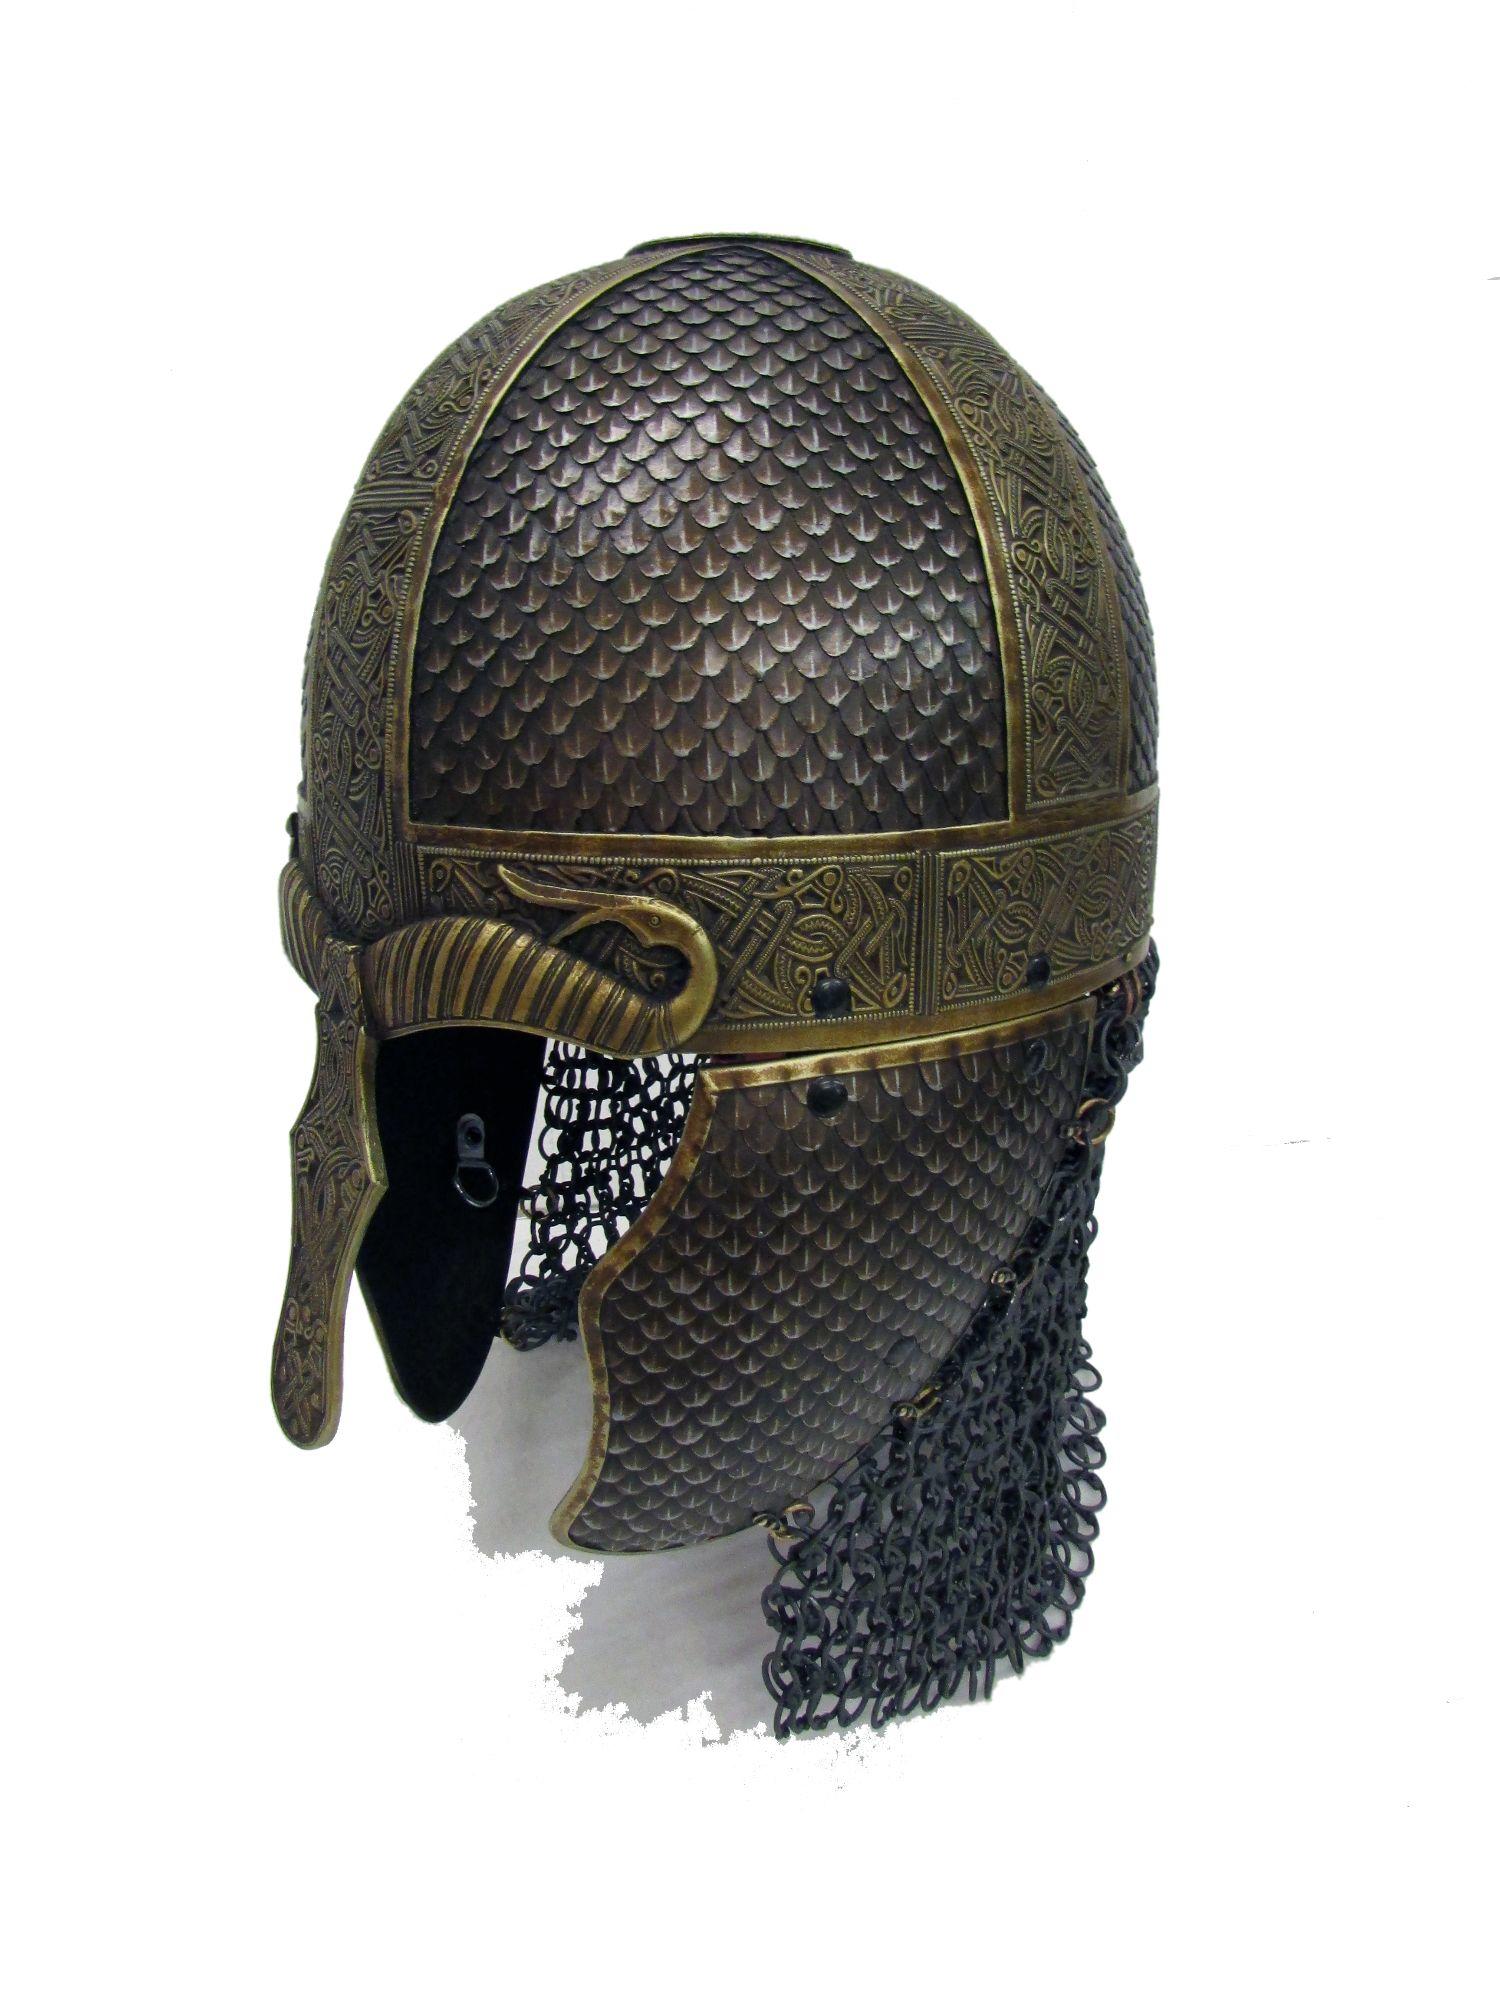 Iron/Bronze Wyrmwick helmet with added chainmail